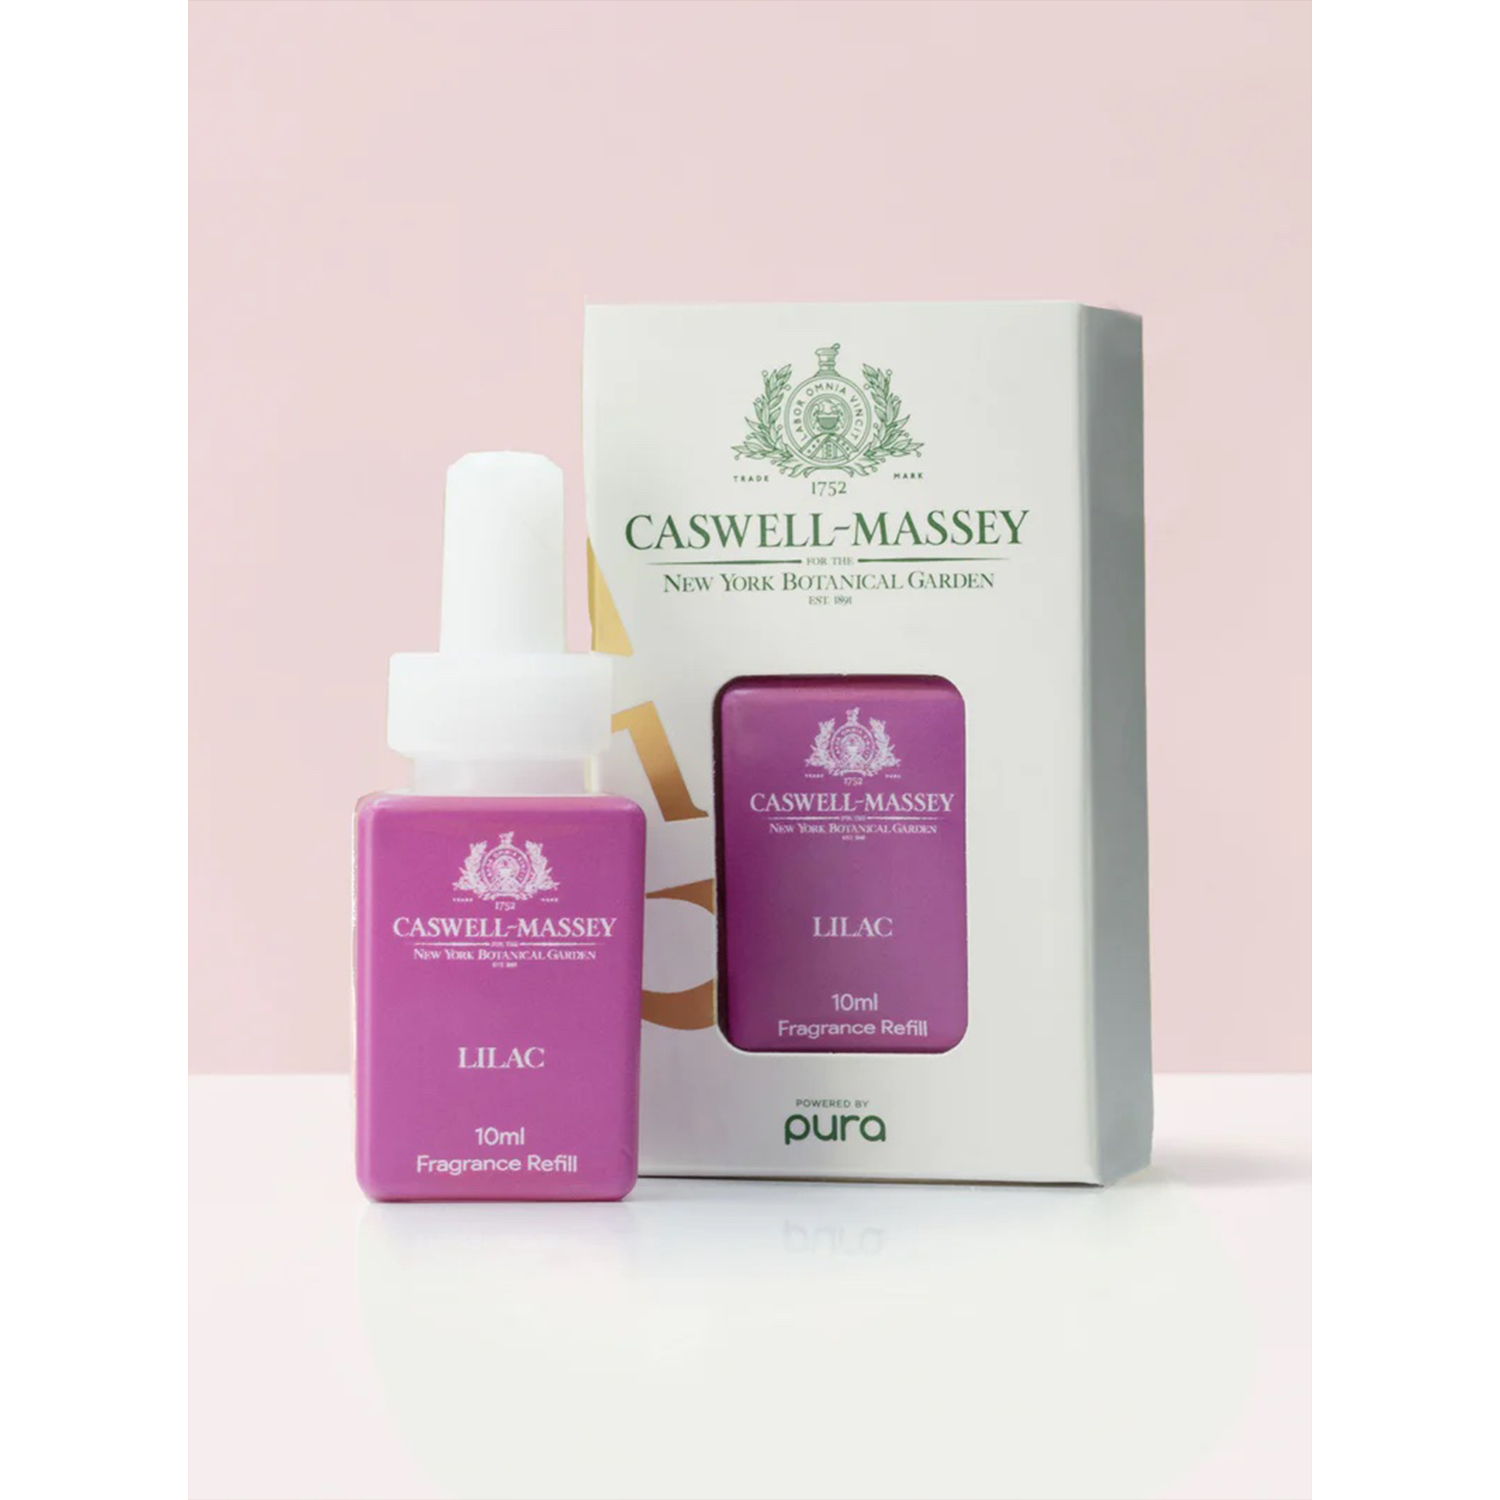 NYBG x Caswell-Massey Pura scent